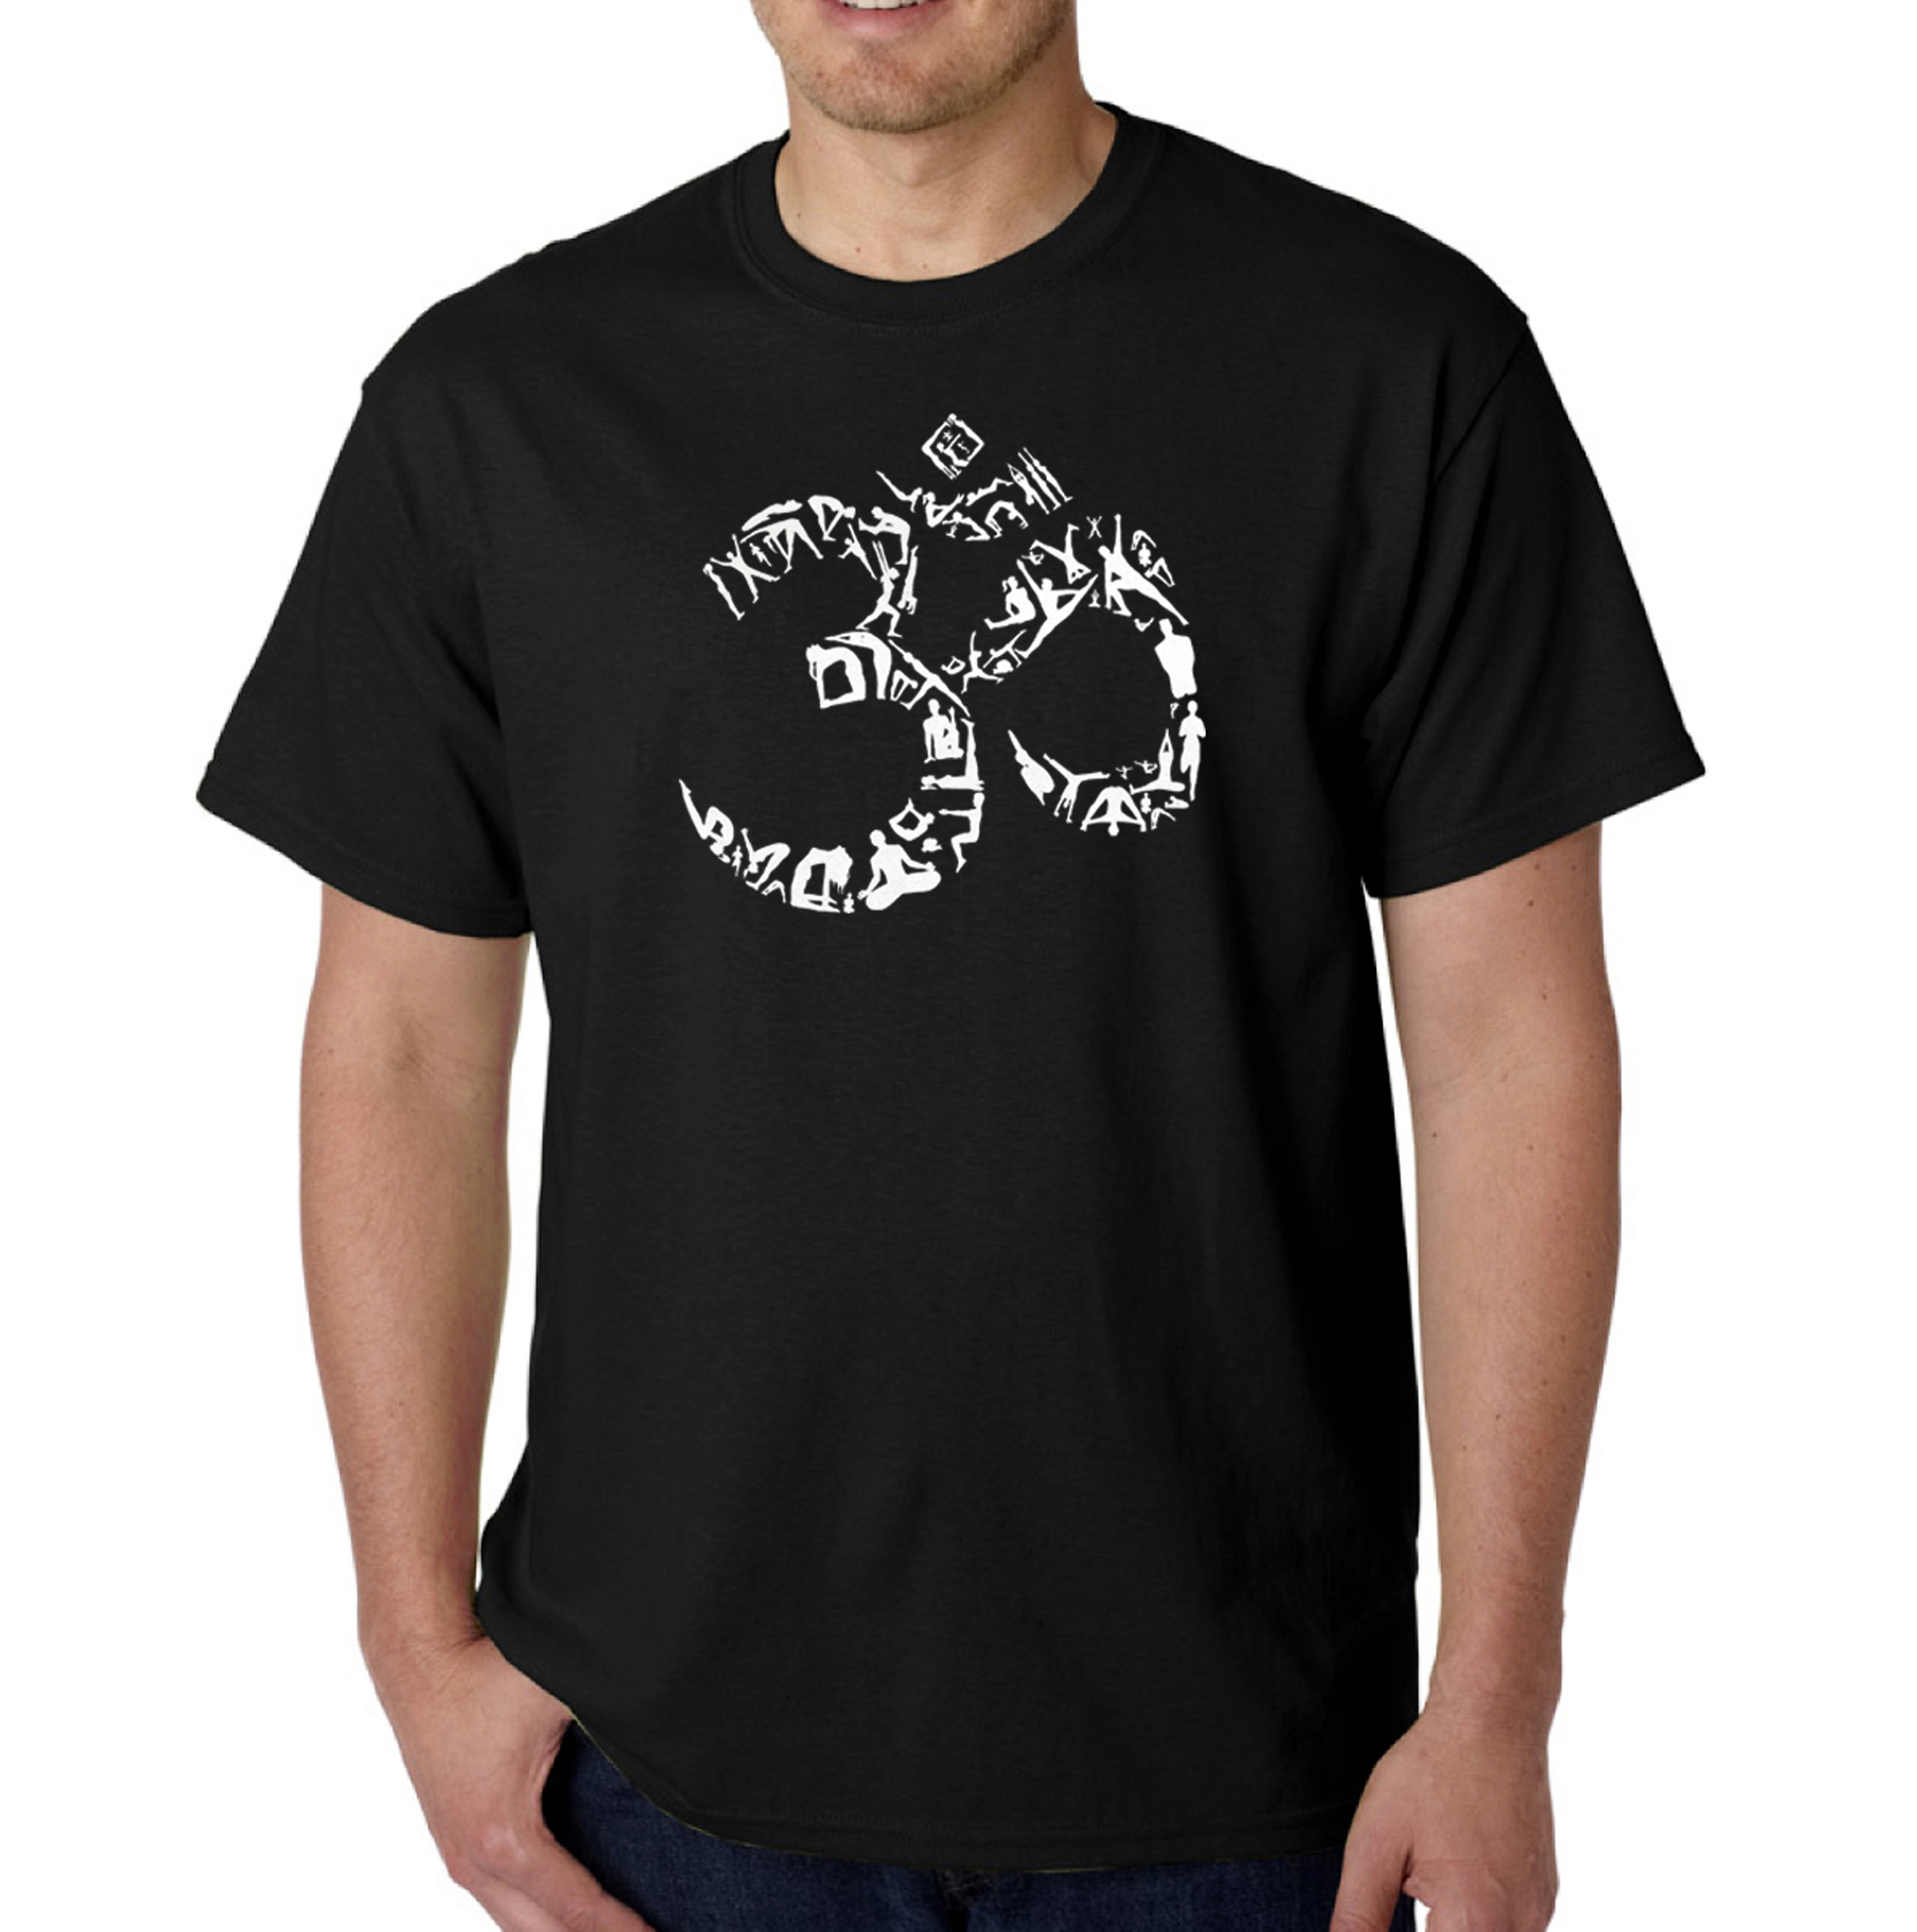 Los Angeles Pop Art Men's Word Art T-shirt - The Om Symbol out of Yoga Poses